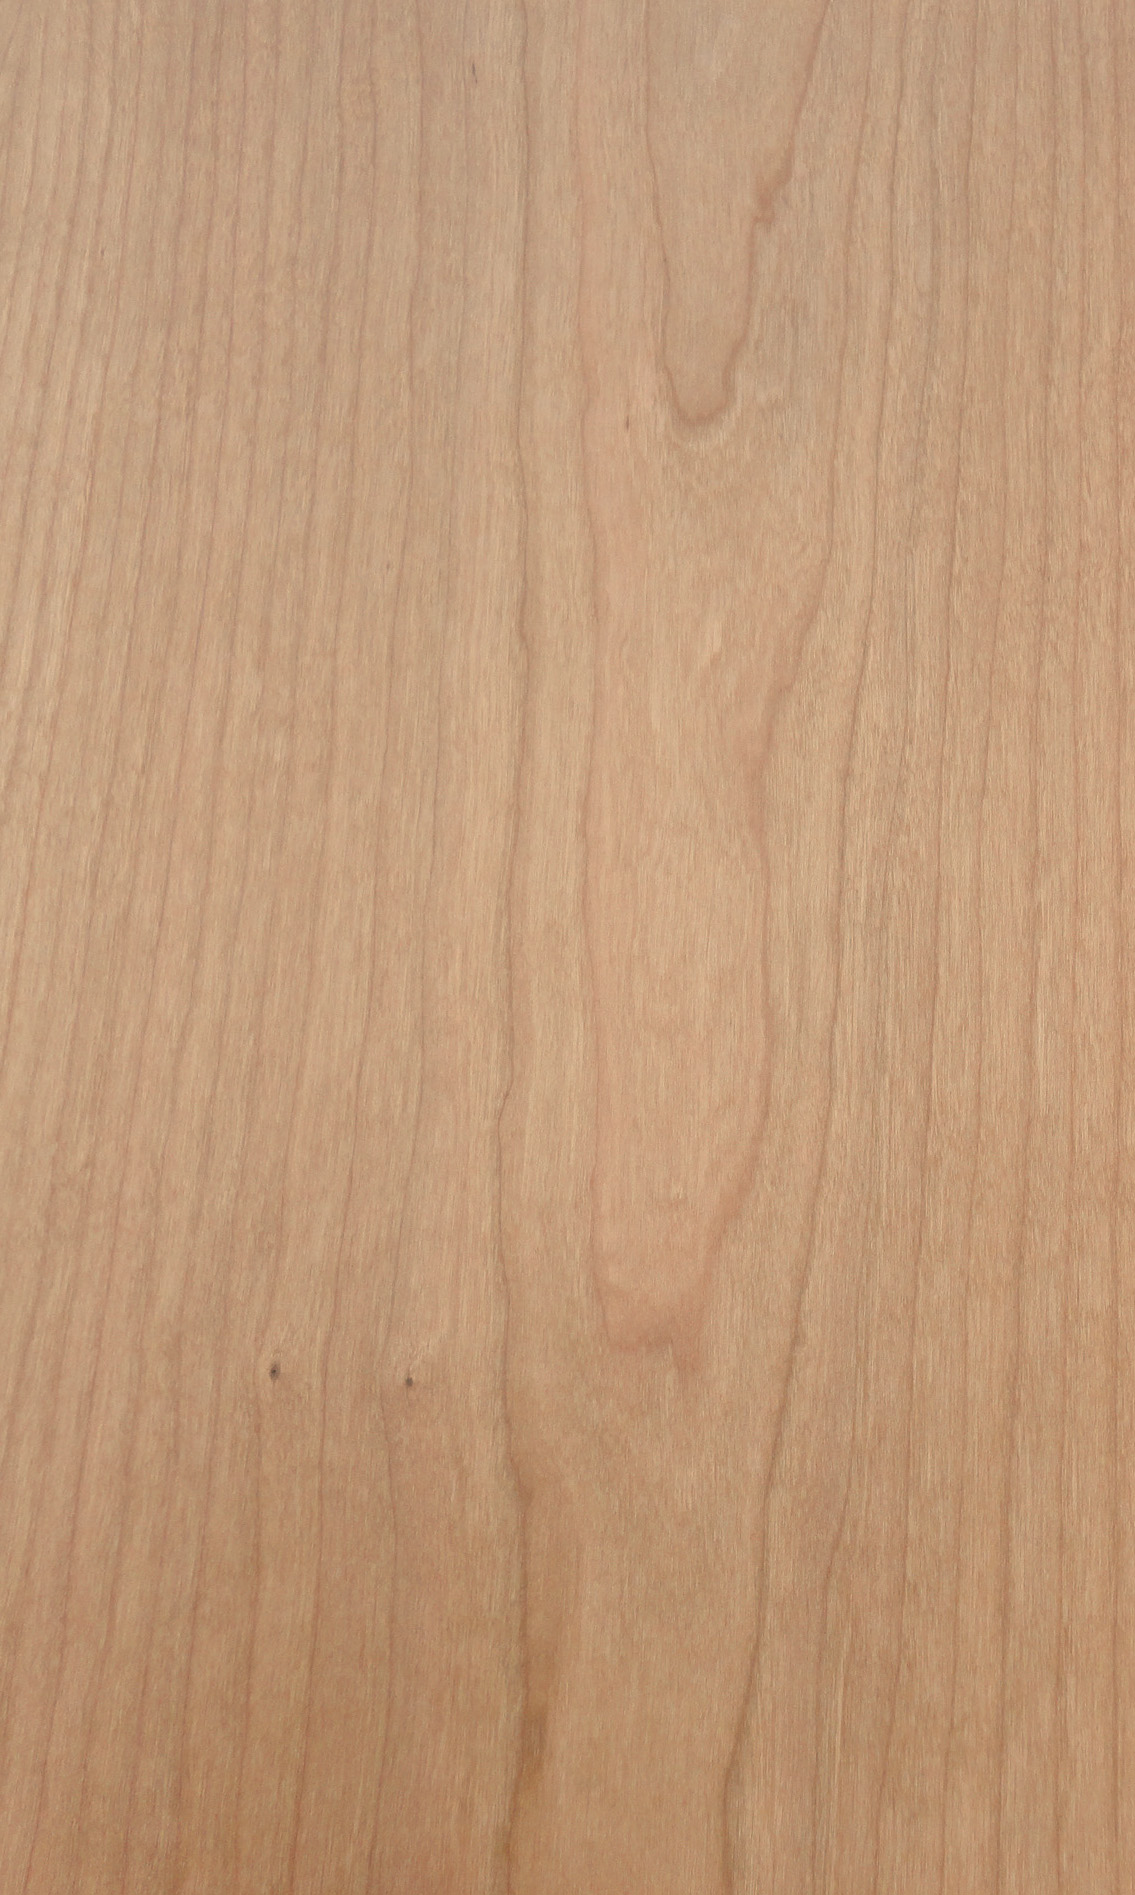 Cherry wood veneer 48" x 24" on paper backer 4' x 2' x 1/40" A grade crossgrain 